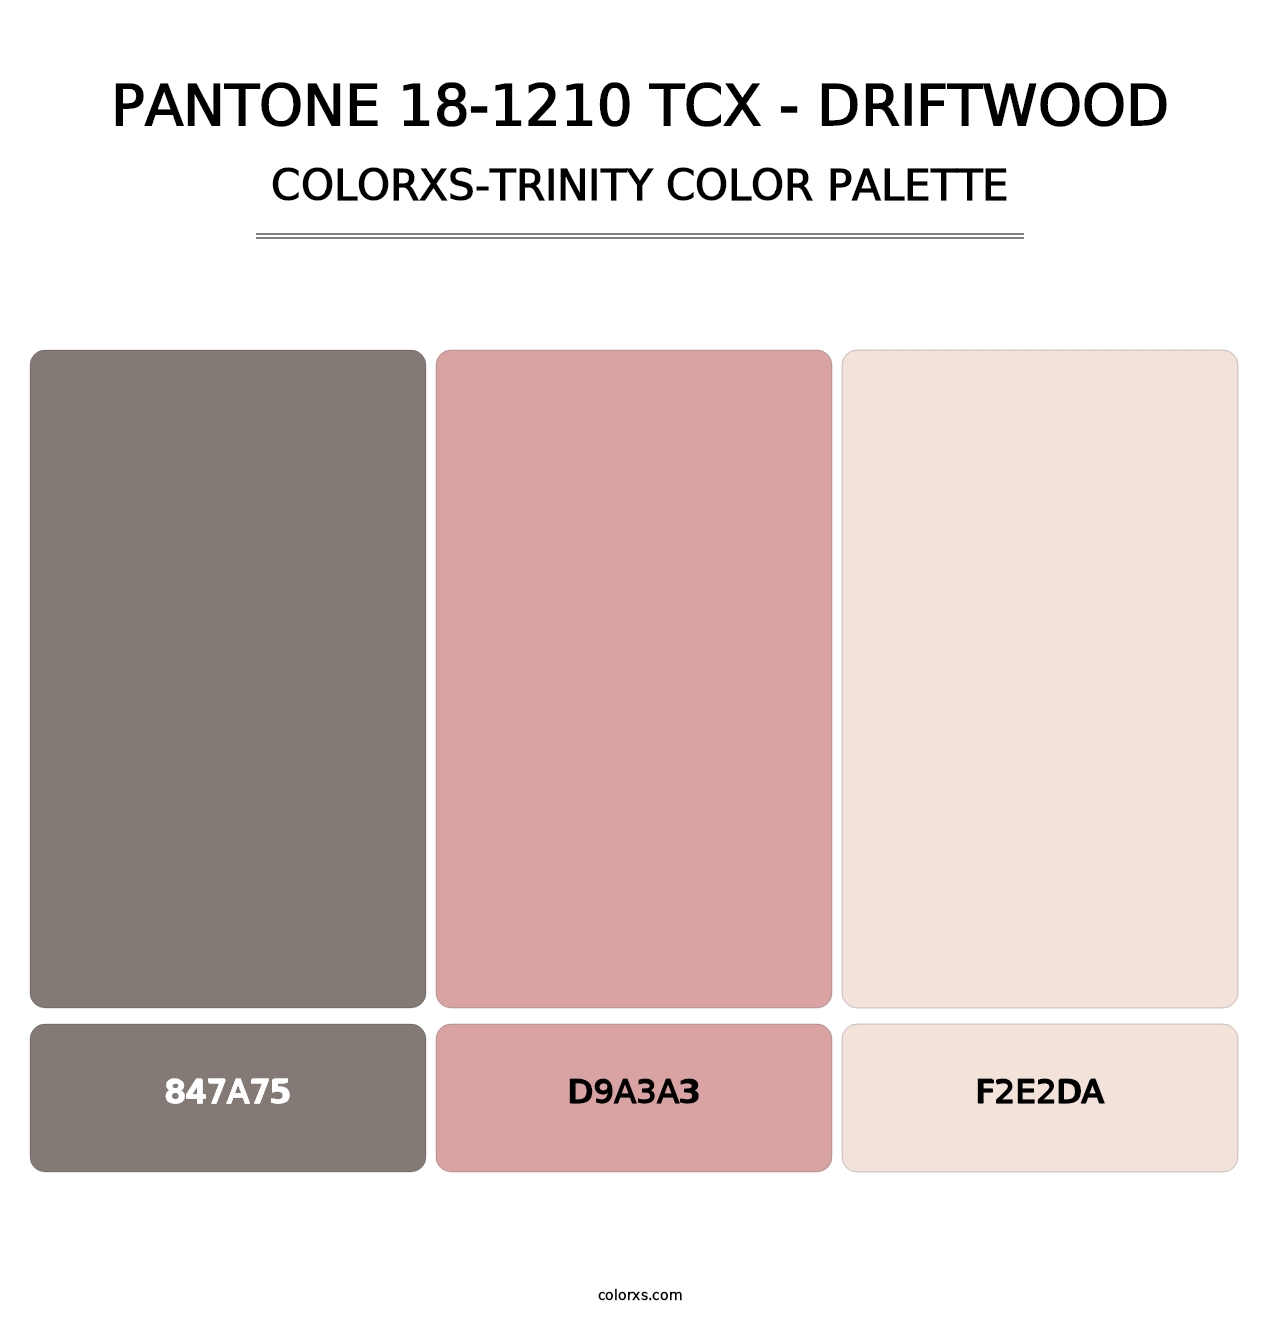 PANTONE 18-1210 TCX - Driftwood - Colorxs Trinity Palette